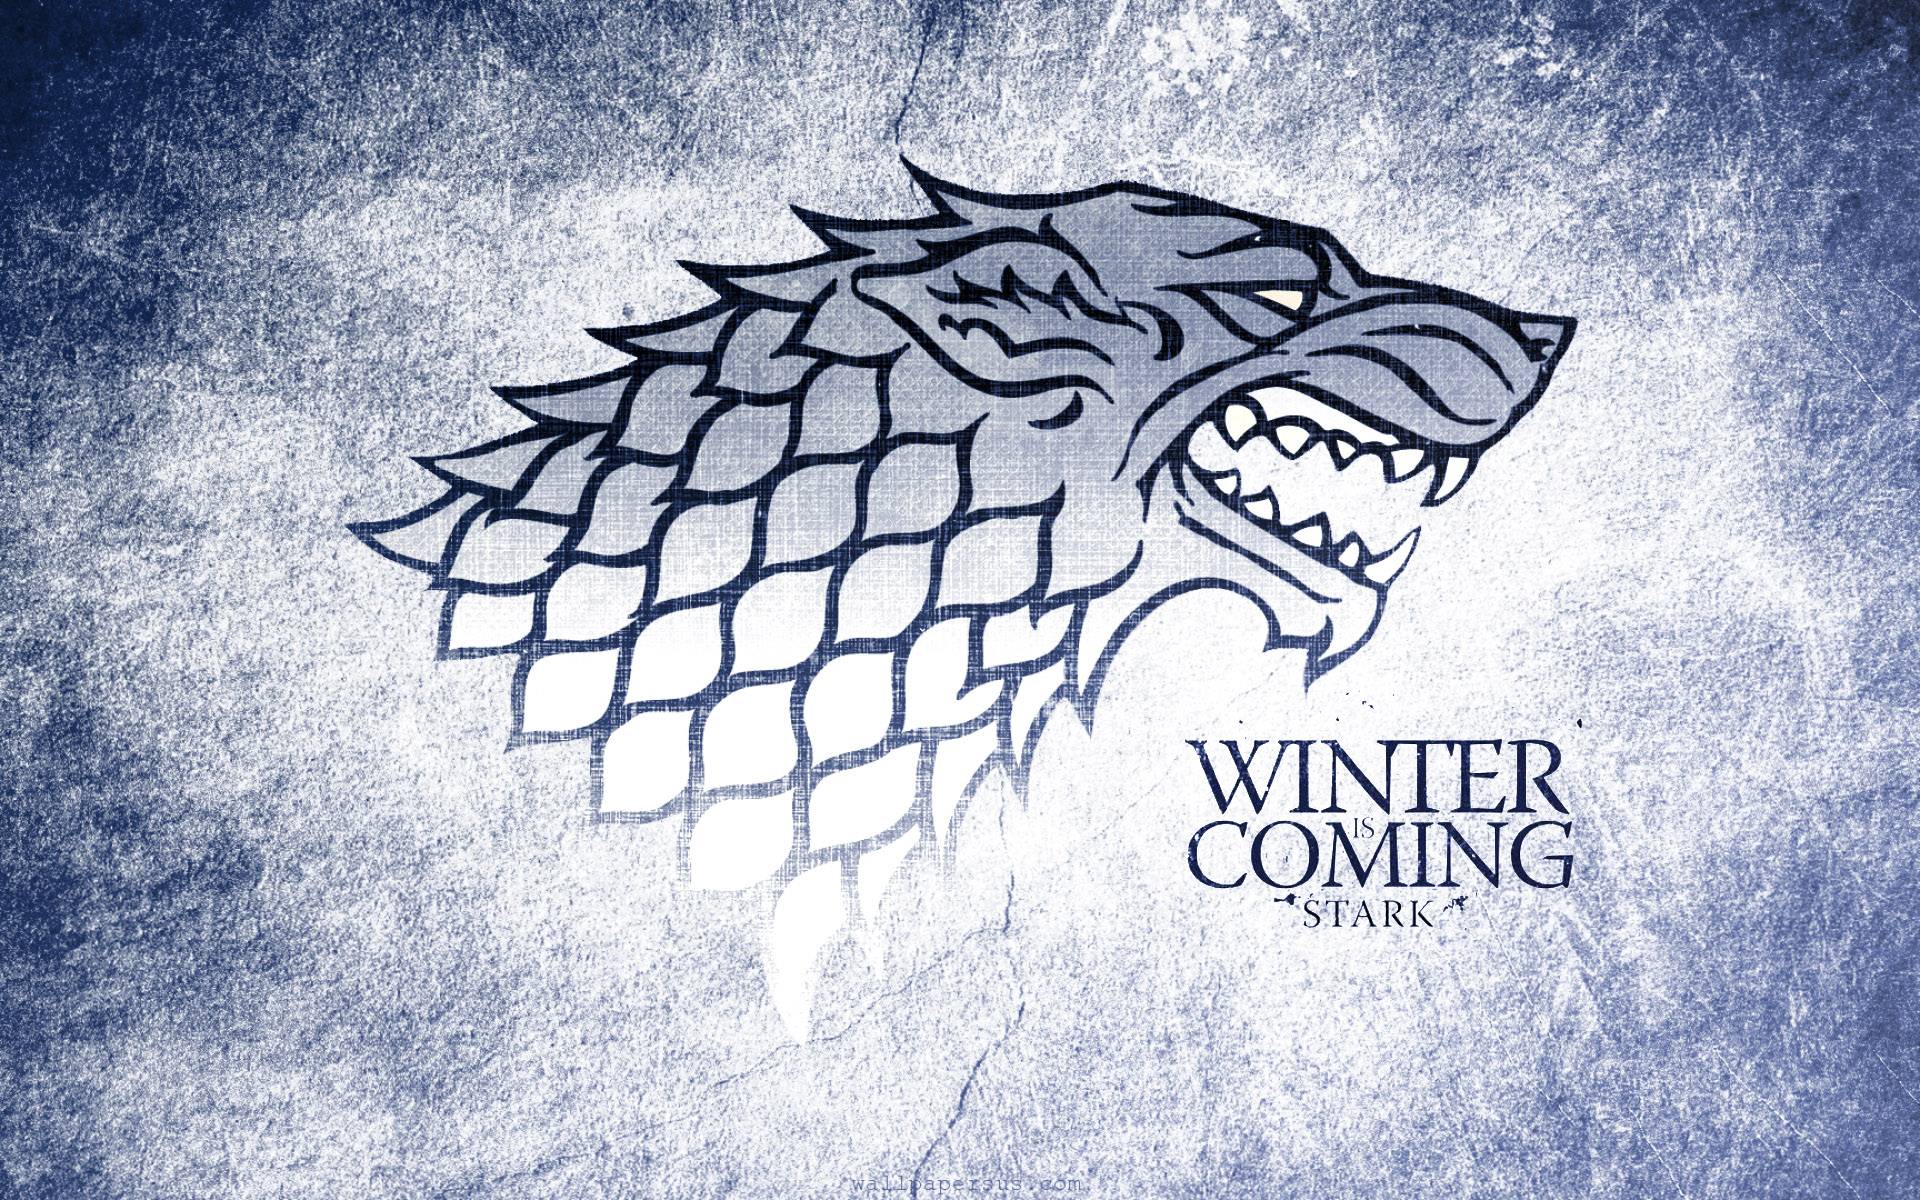 Winter Is Coming, Stark Wolf Grunge Logo 1920x1200 WIDE Image TV